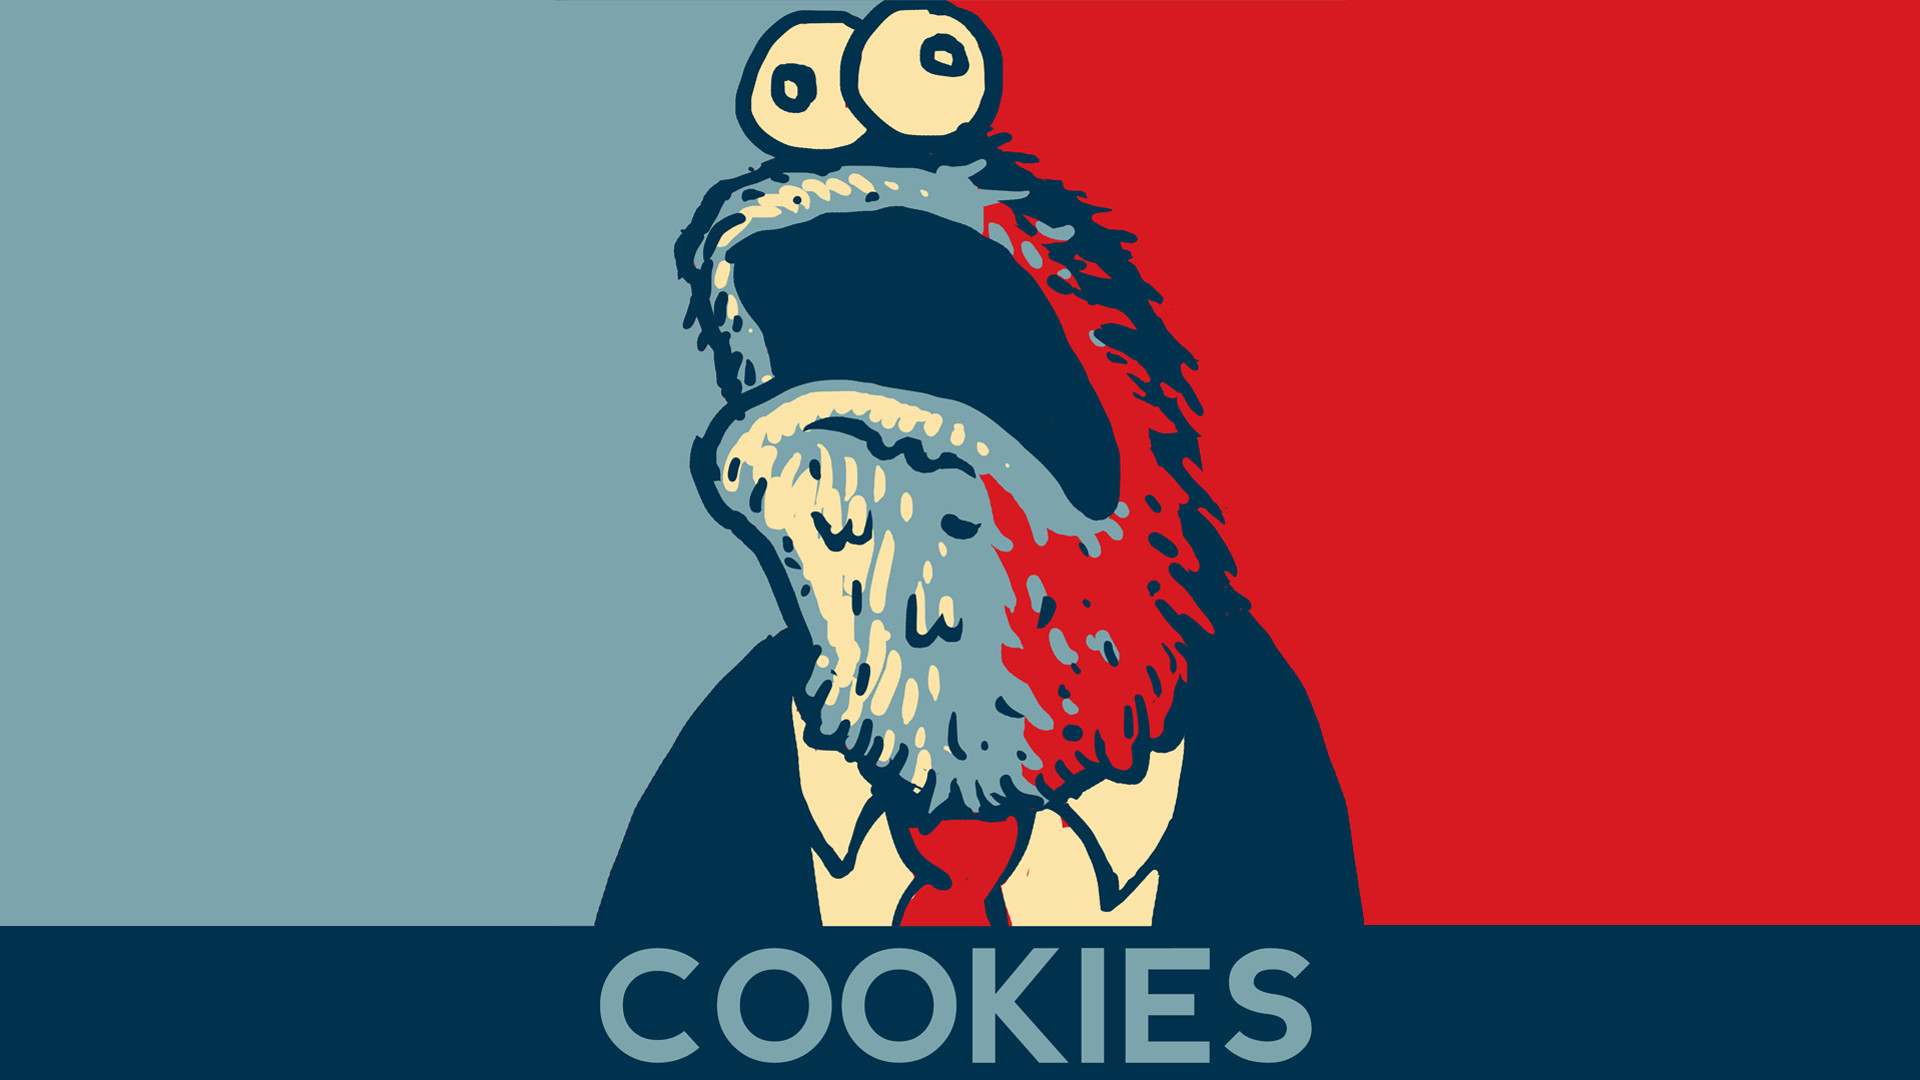 1920x1080 Best 28+ Cookie Monster Backgrounds on HipWallpaper | Cute Monster .